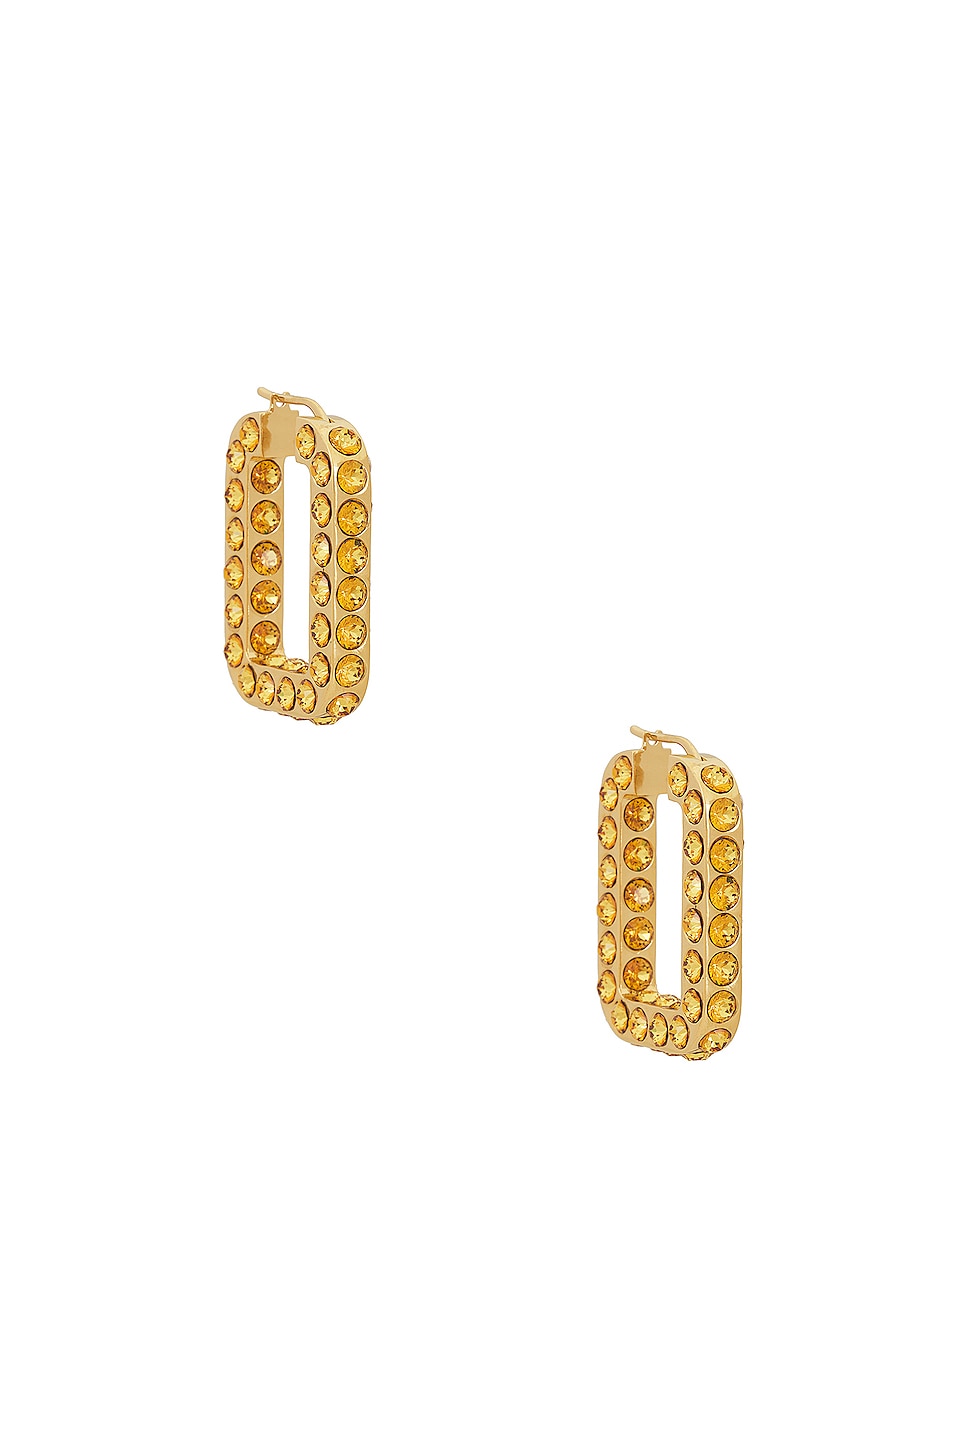 AMINA MUADDI Charlotte Hoop Earrings in Golden Topaz | FWRD